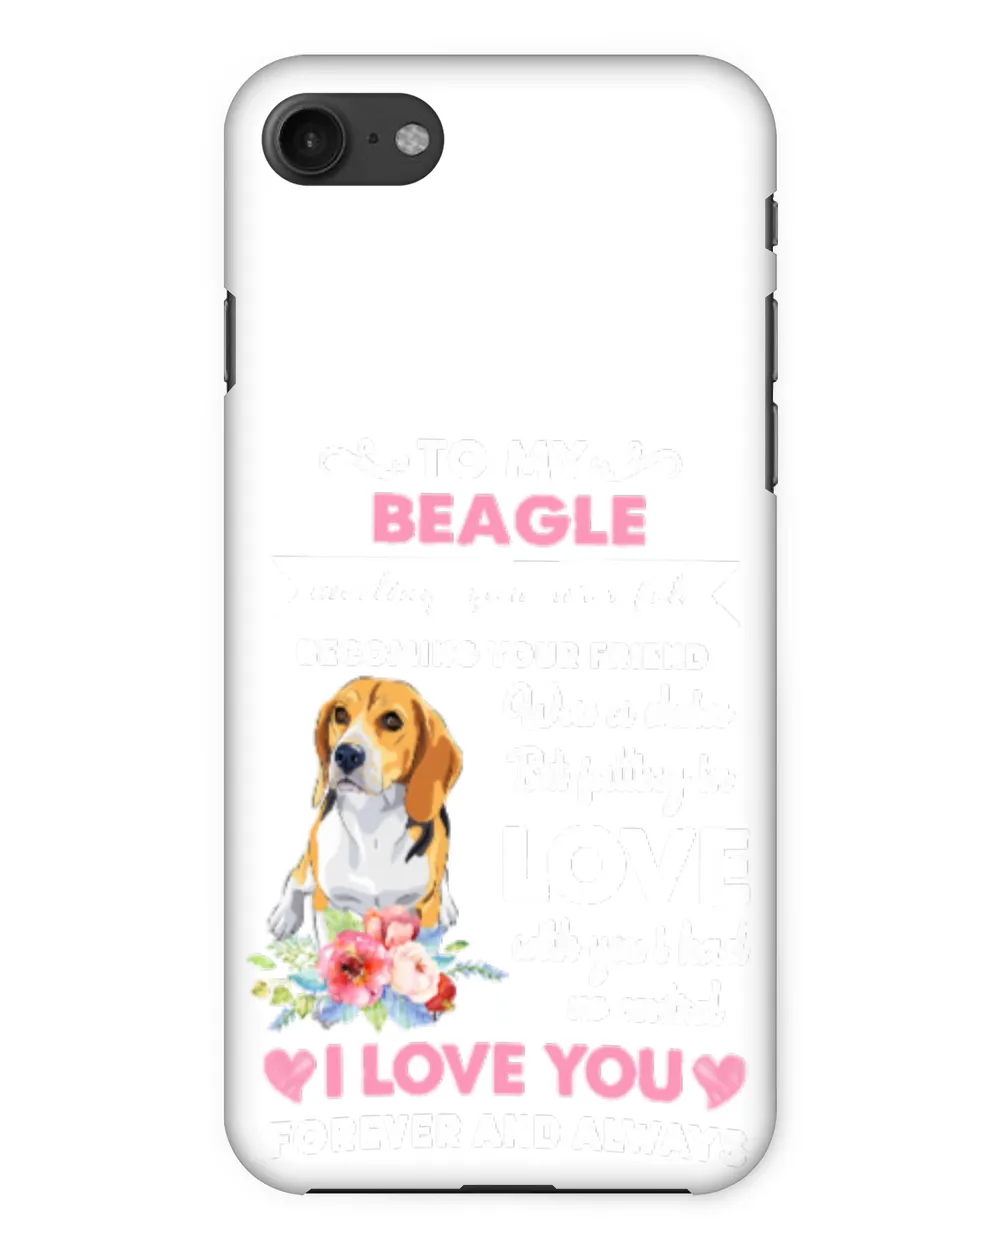 Dog To My Beagle I Love You 357 paws